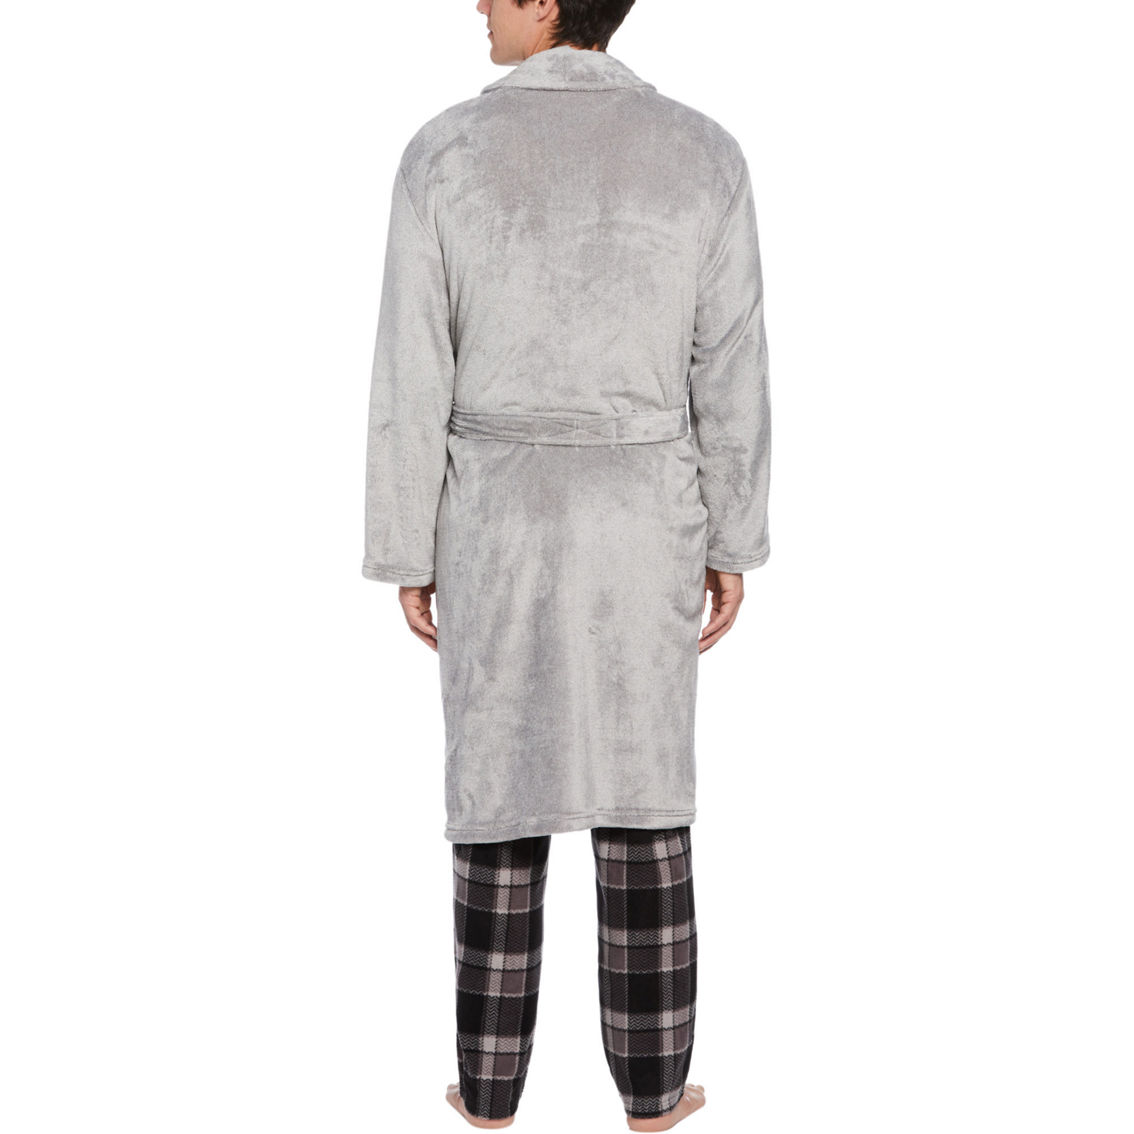 Perry Ellis Fleece Marled Robe - Image 2 of 2